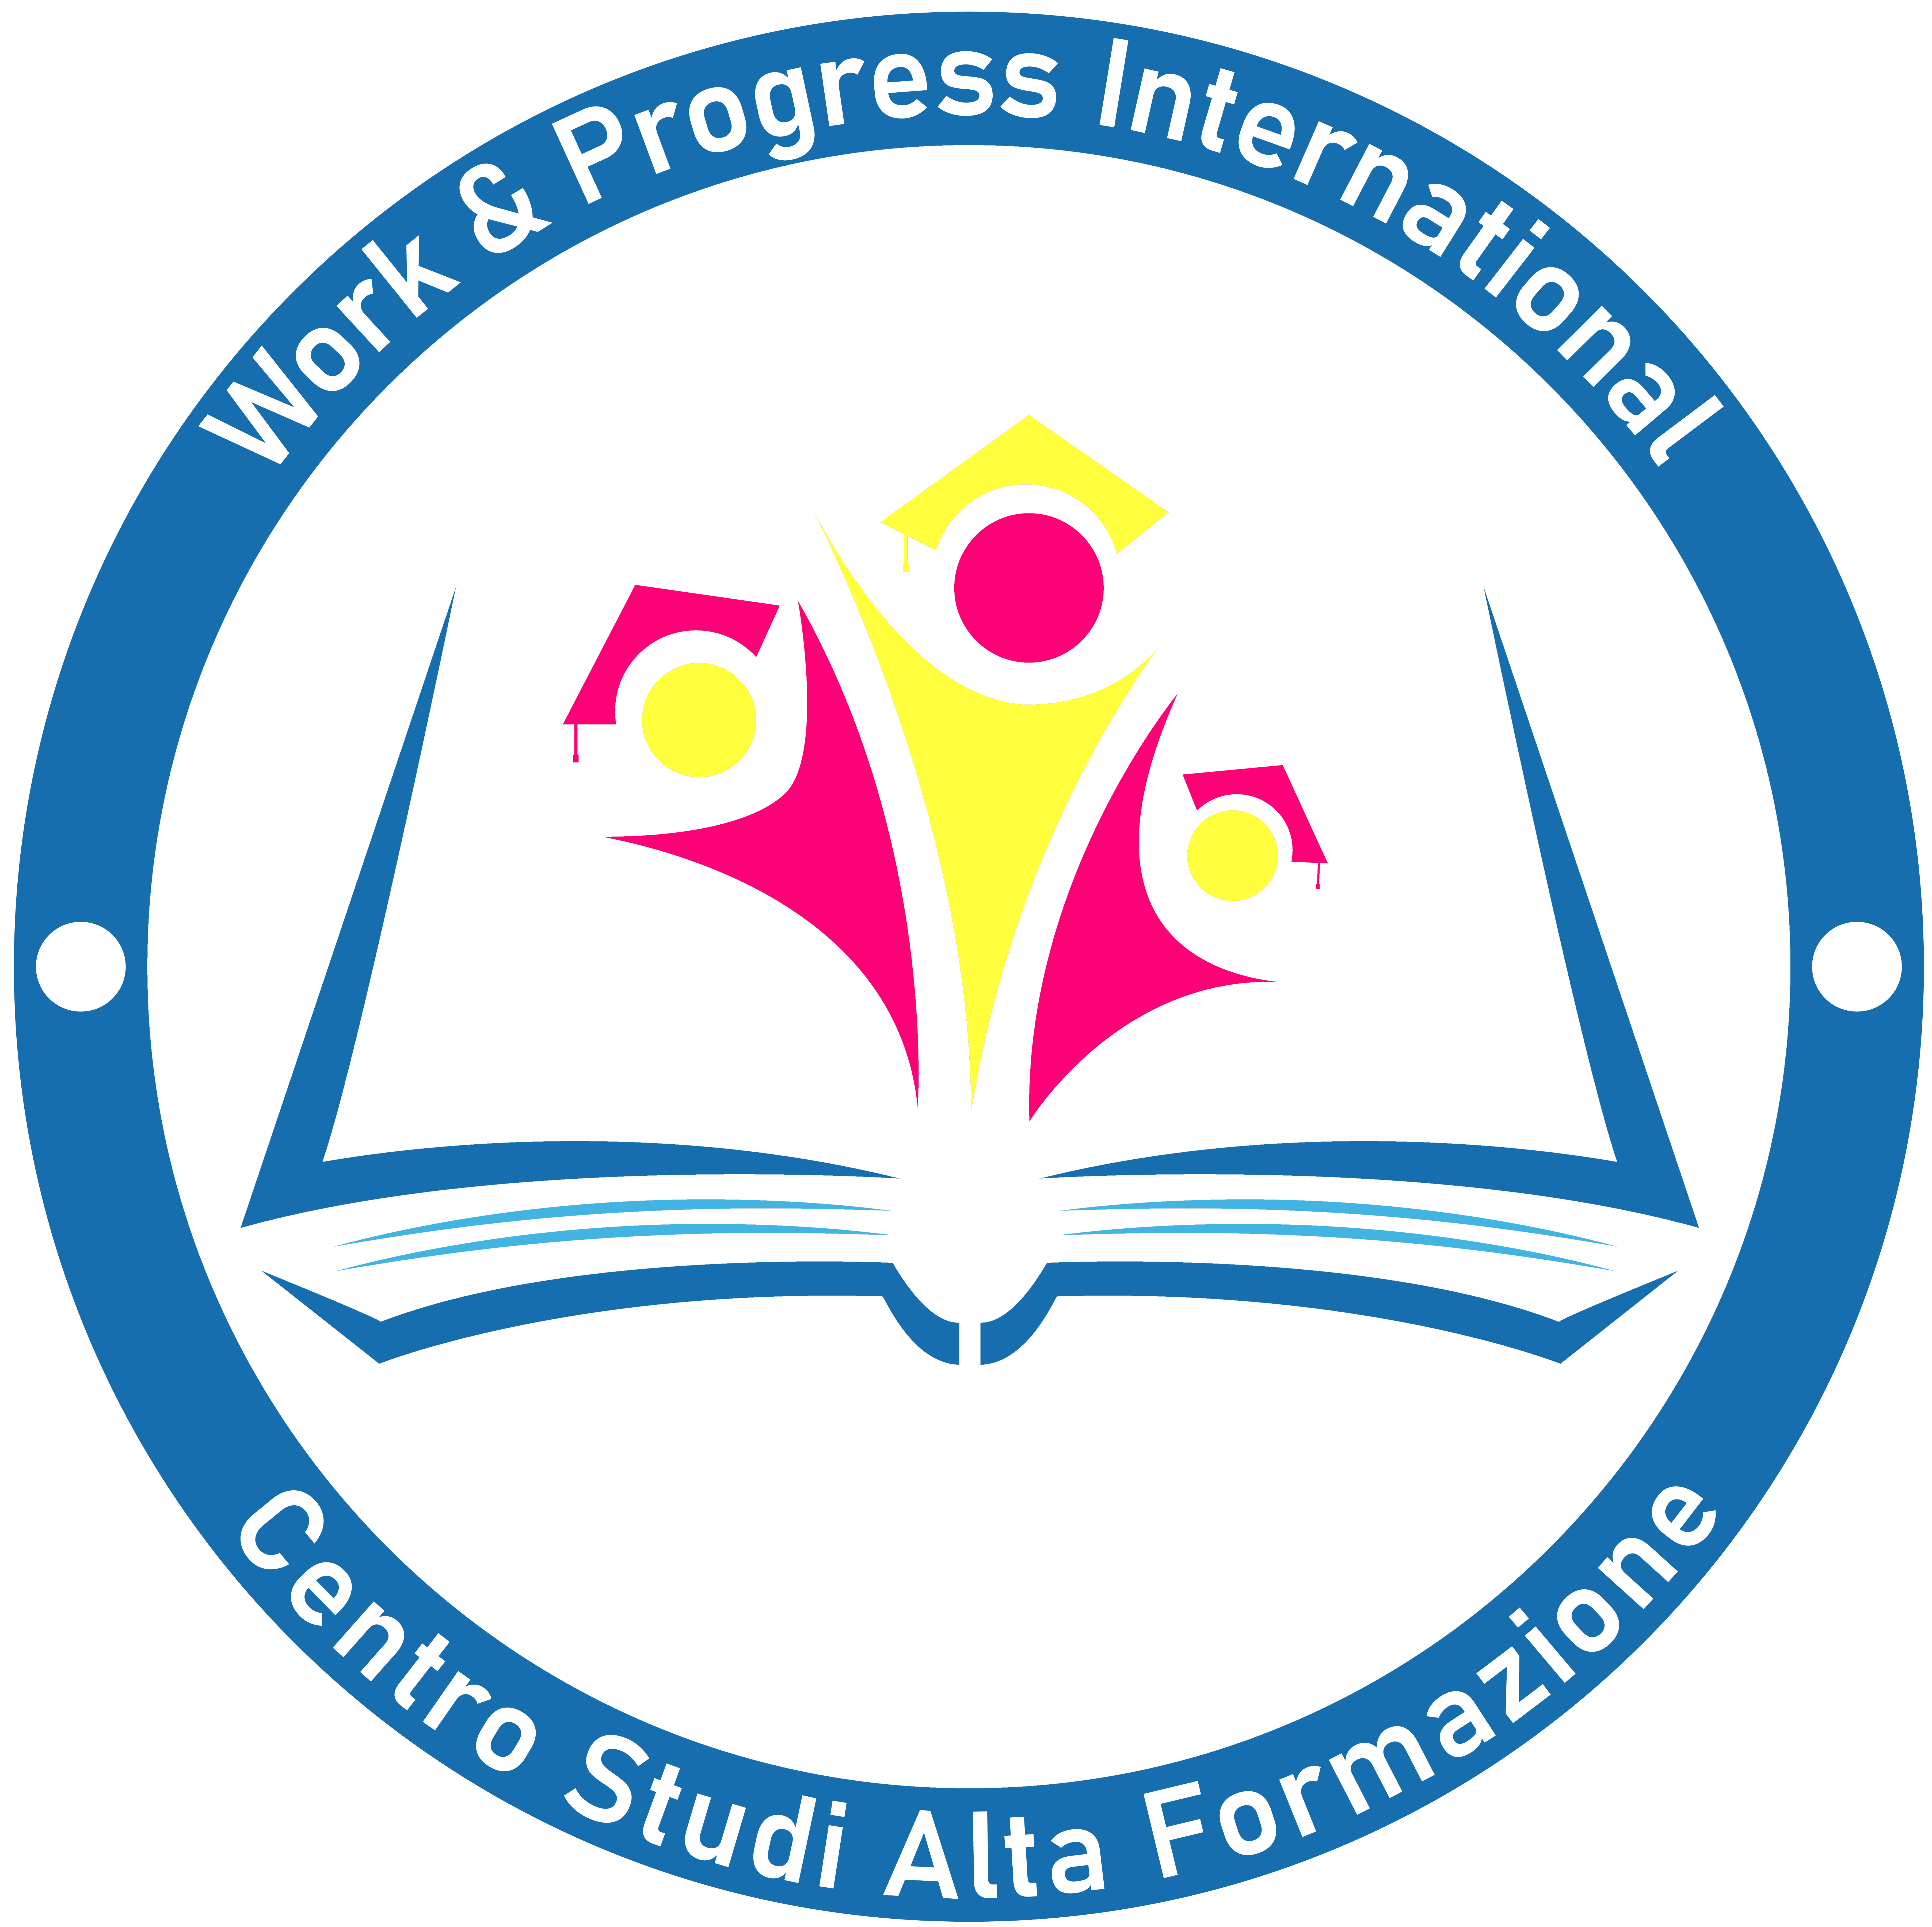 Work & Progress International